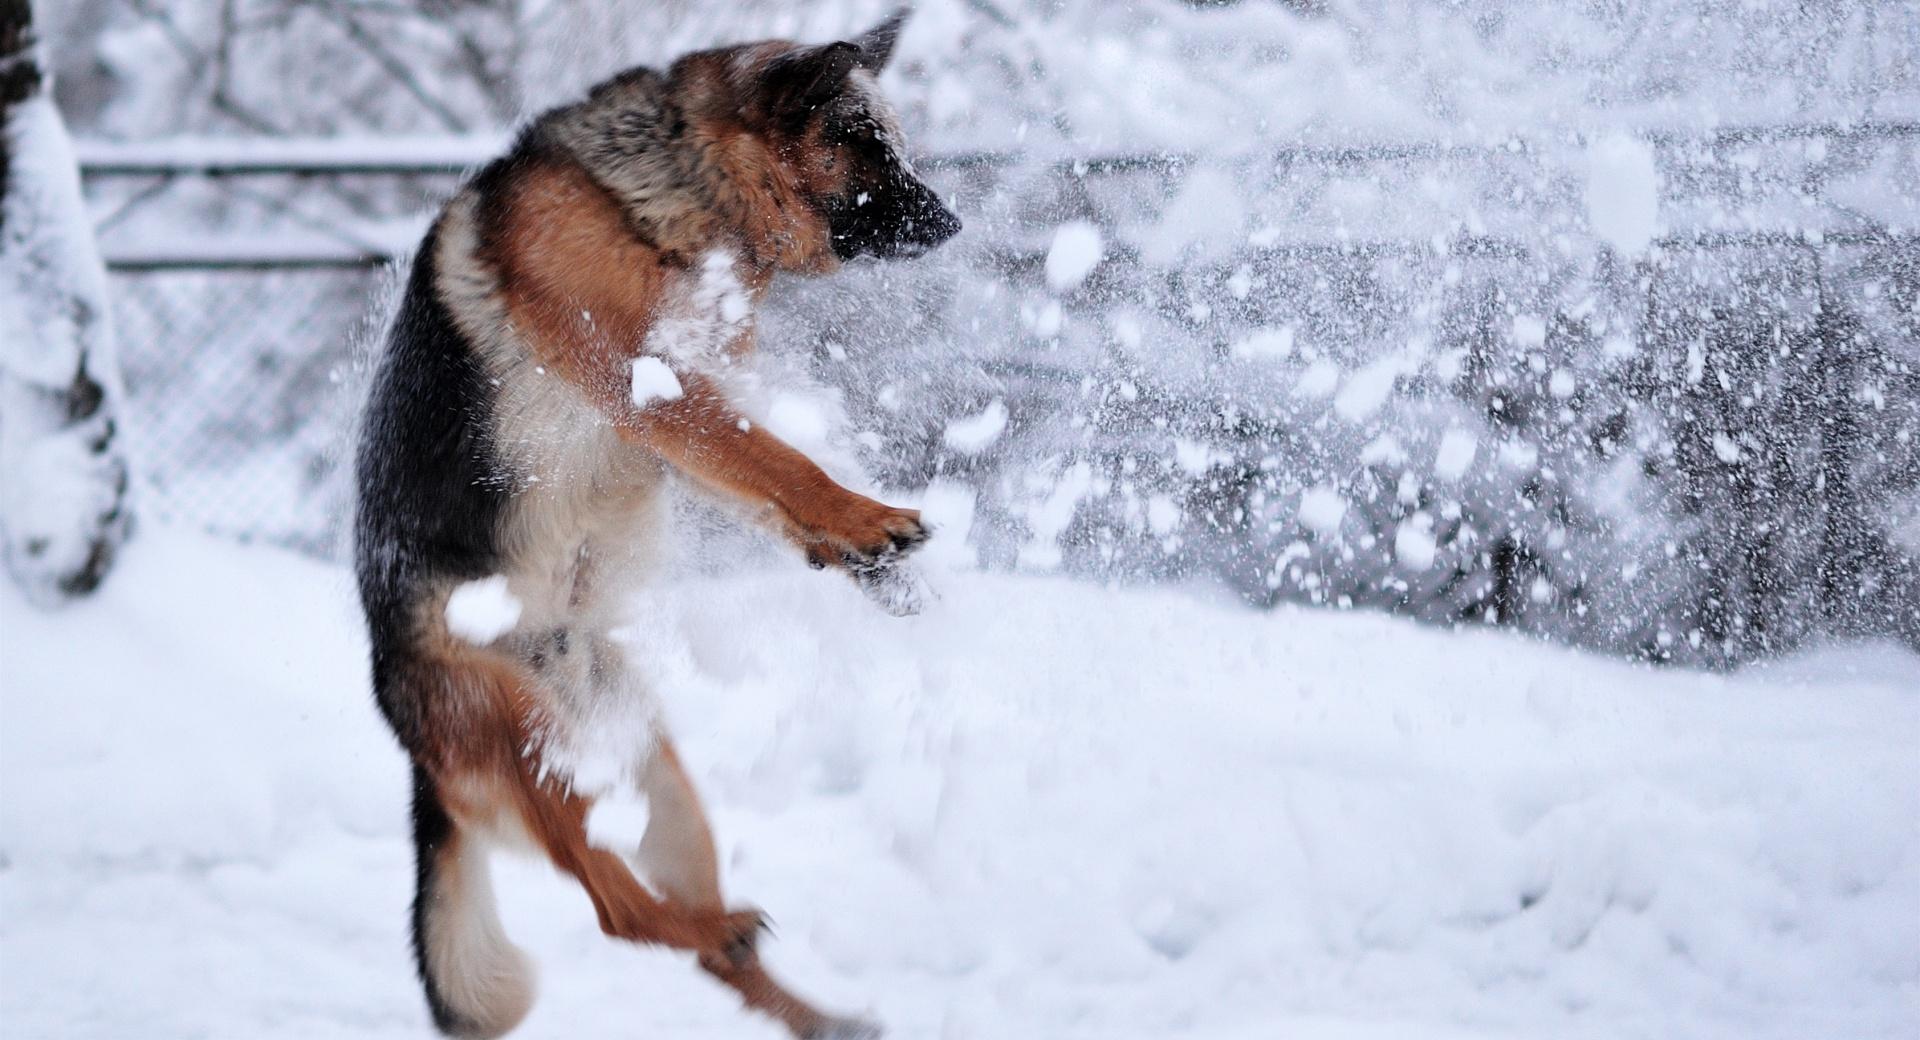 German Shepherd Plying In The Snow wallpapers HD quality